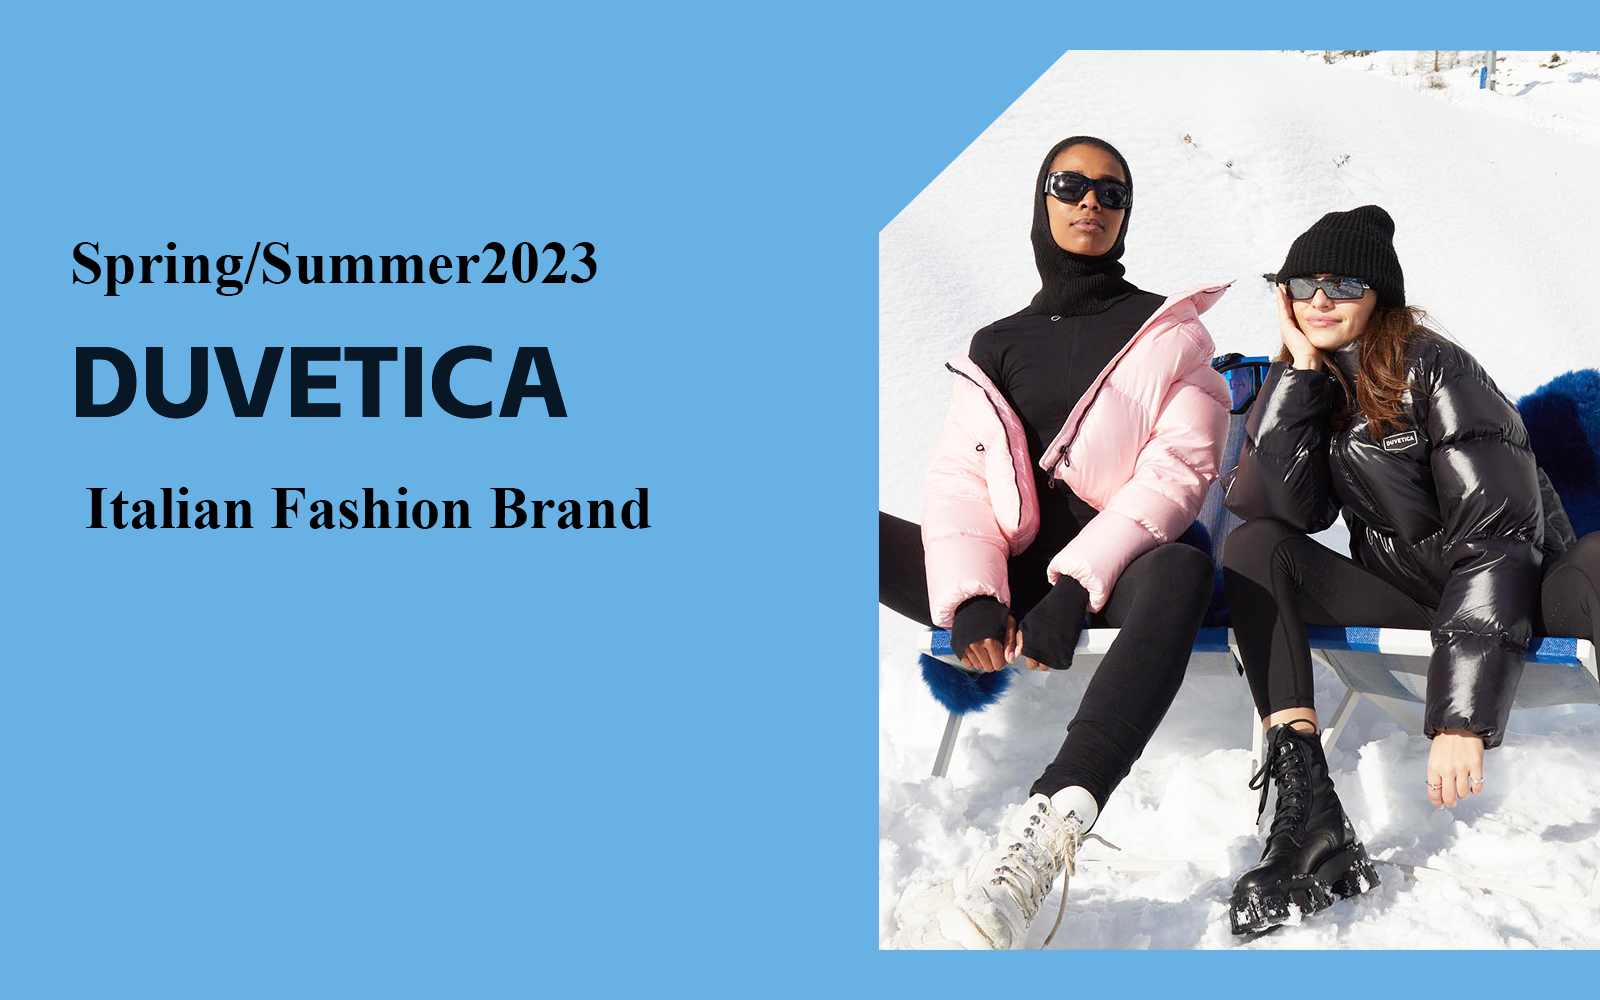 Urban Aesthetics -- The Analysis of Duvetica The Italian Fashion Brand